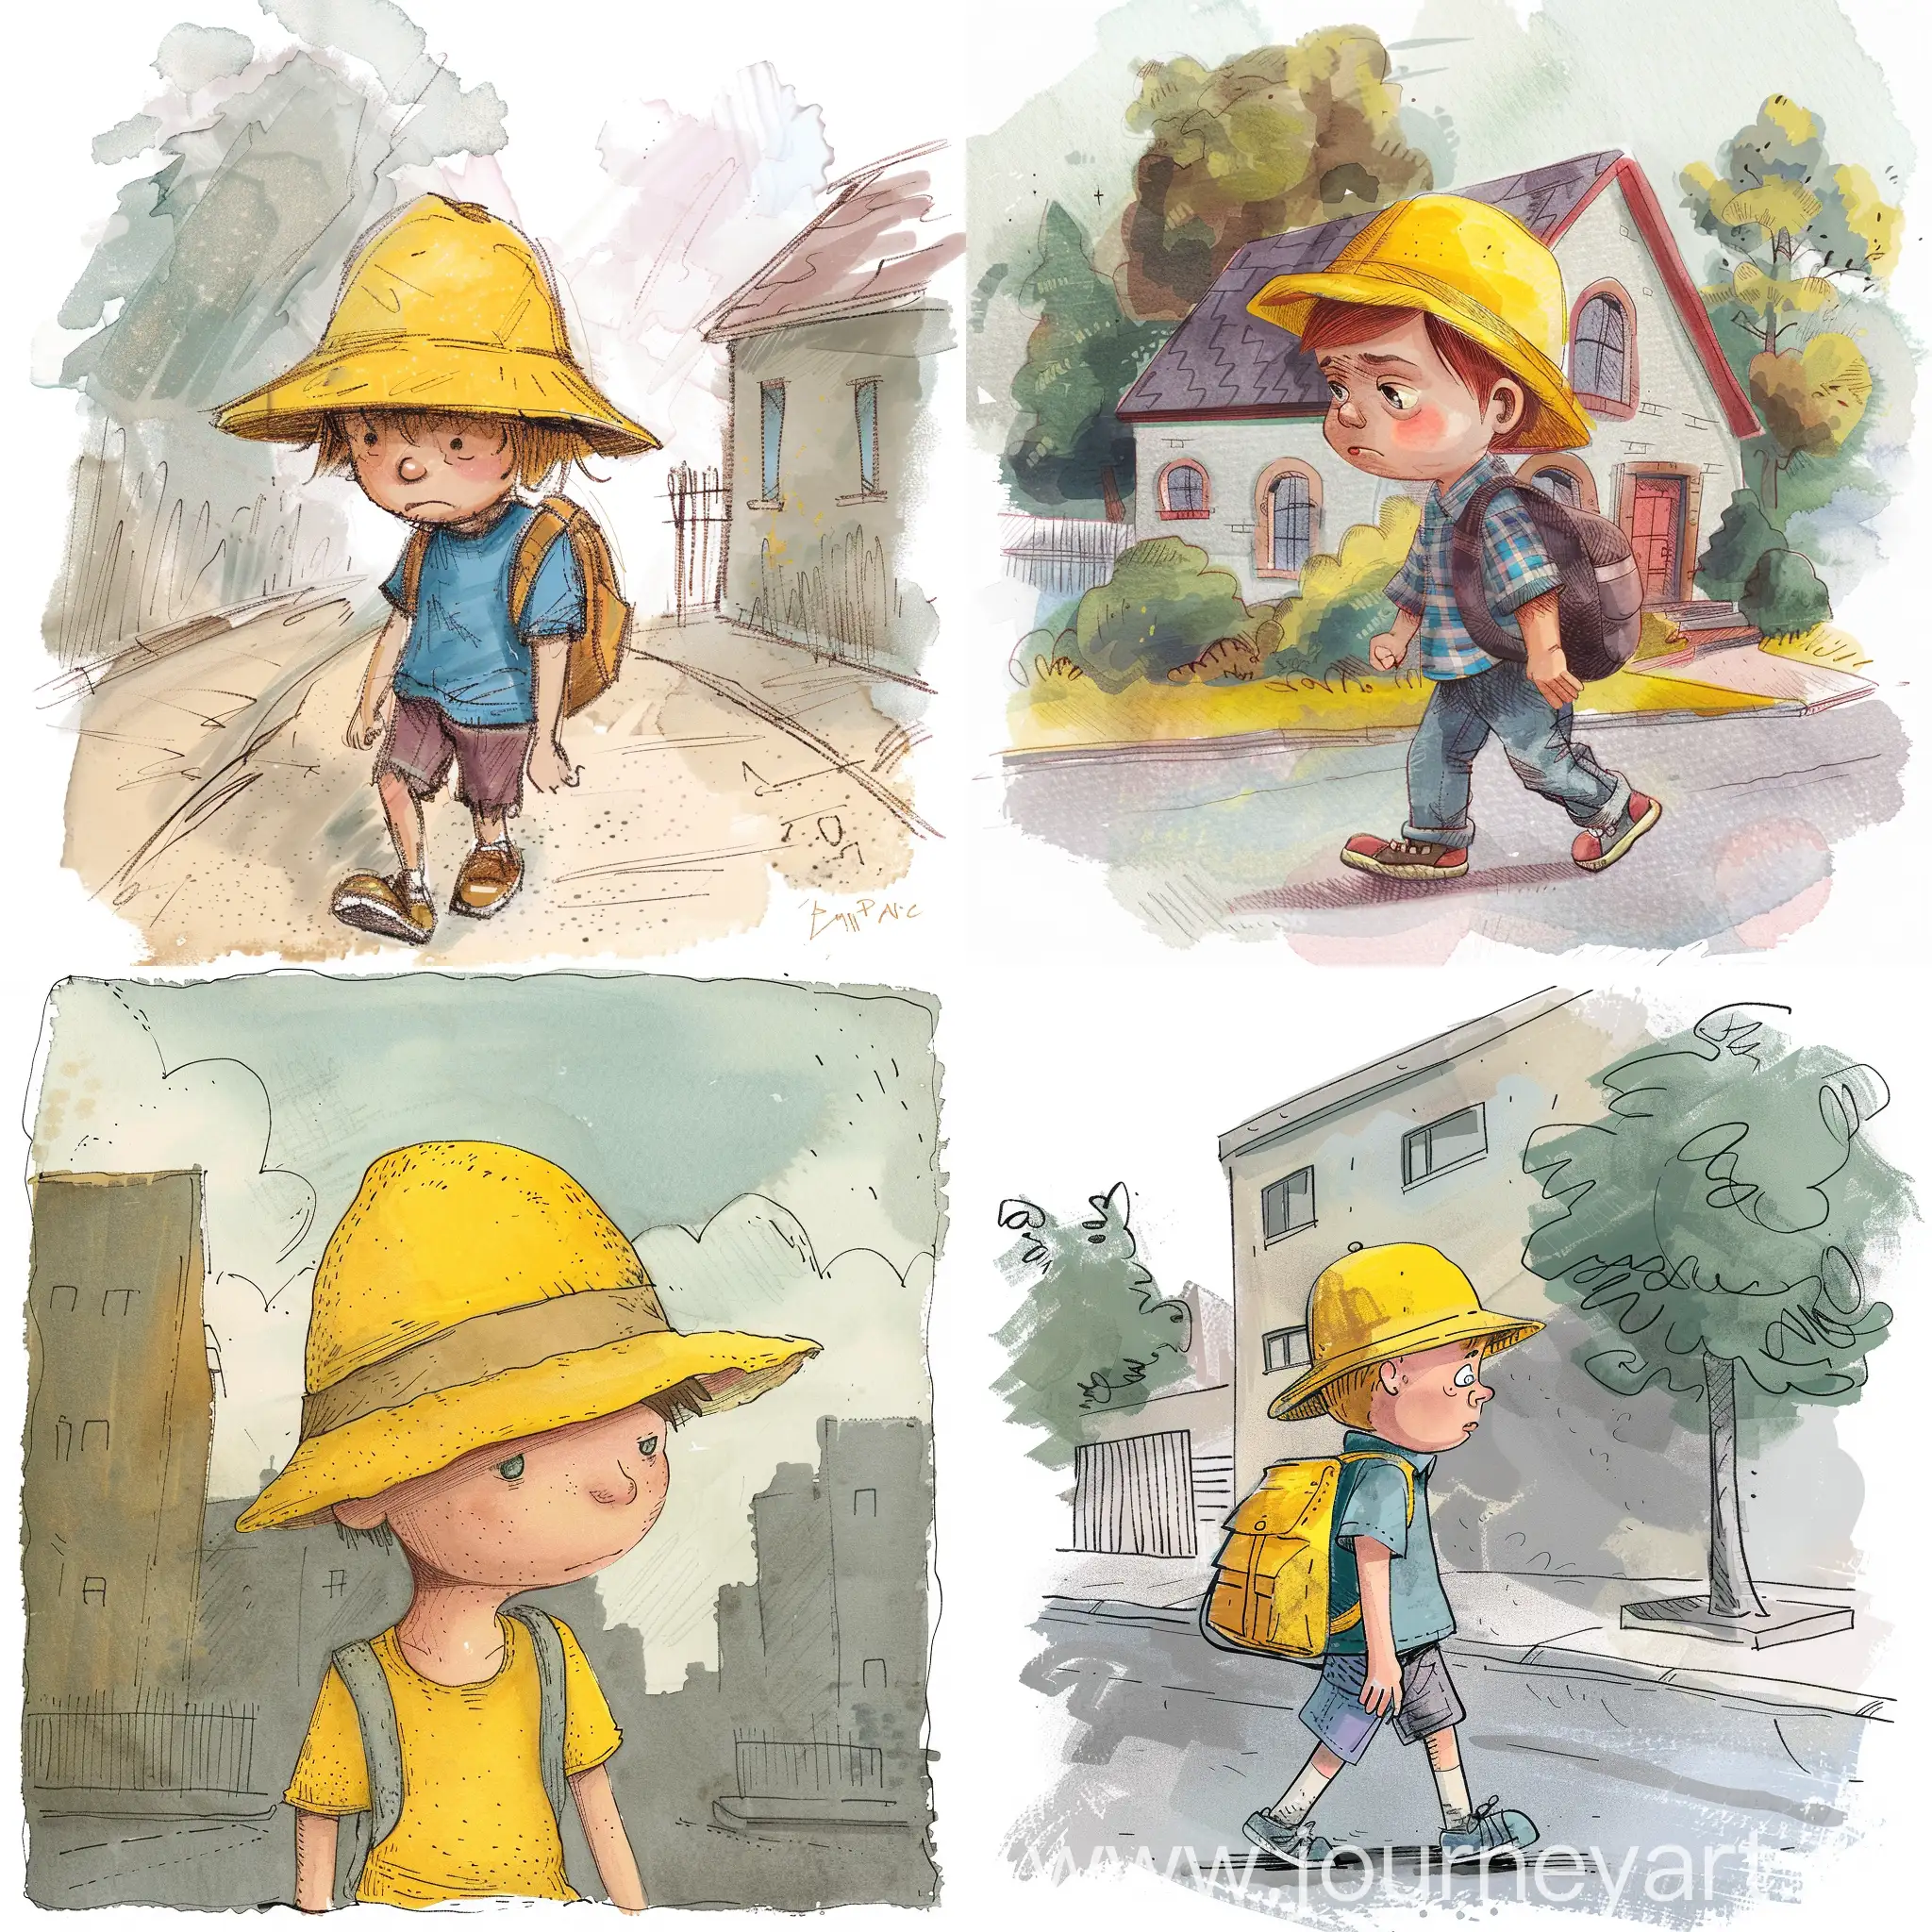 Disheartened-Schoolboy-in-Yellow-Hat-Walking-Home